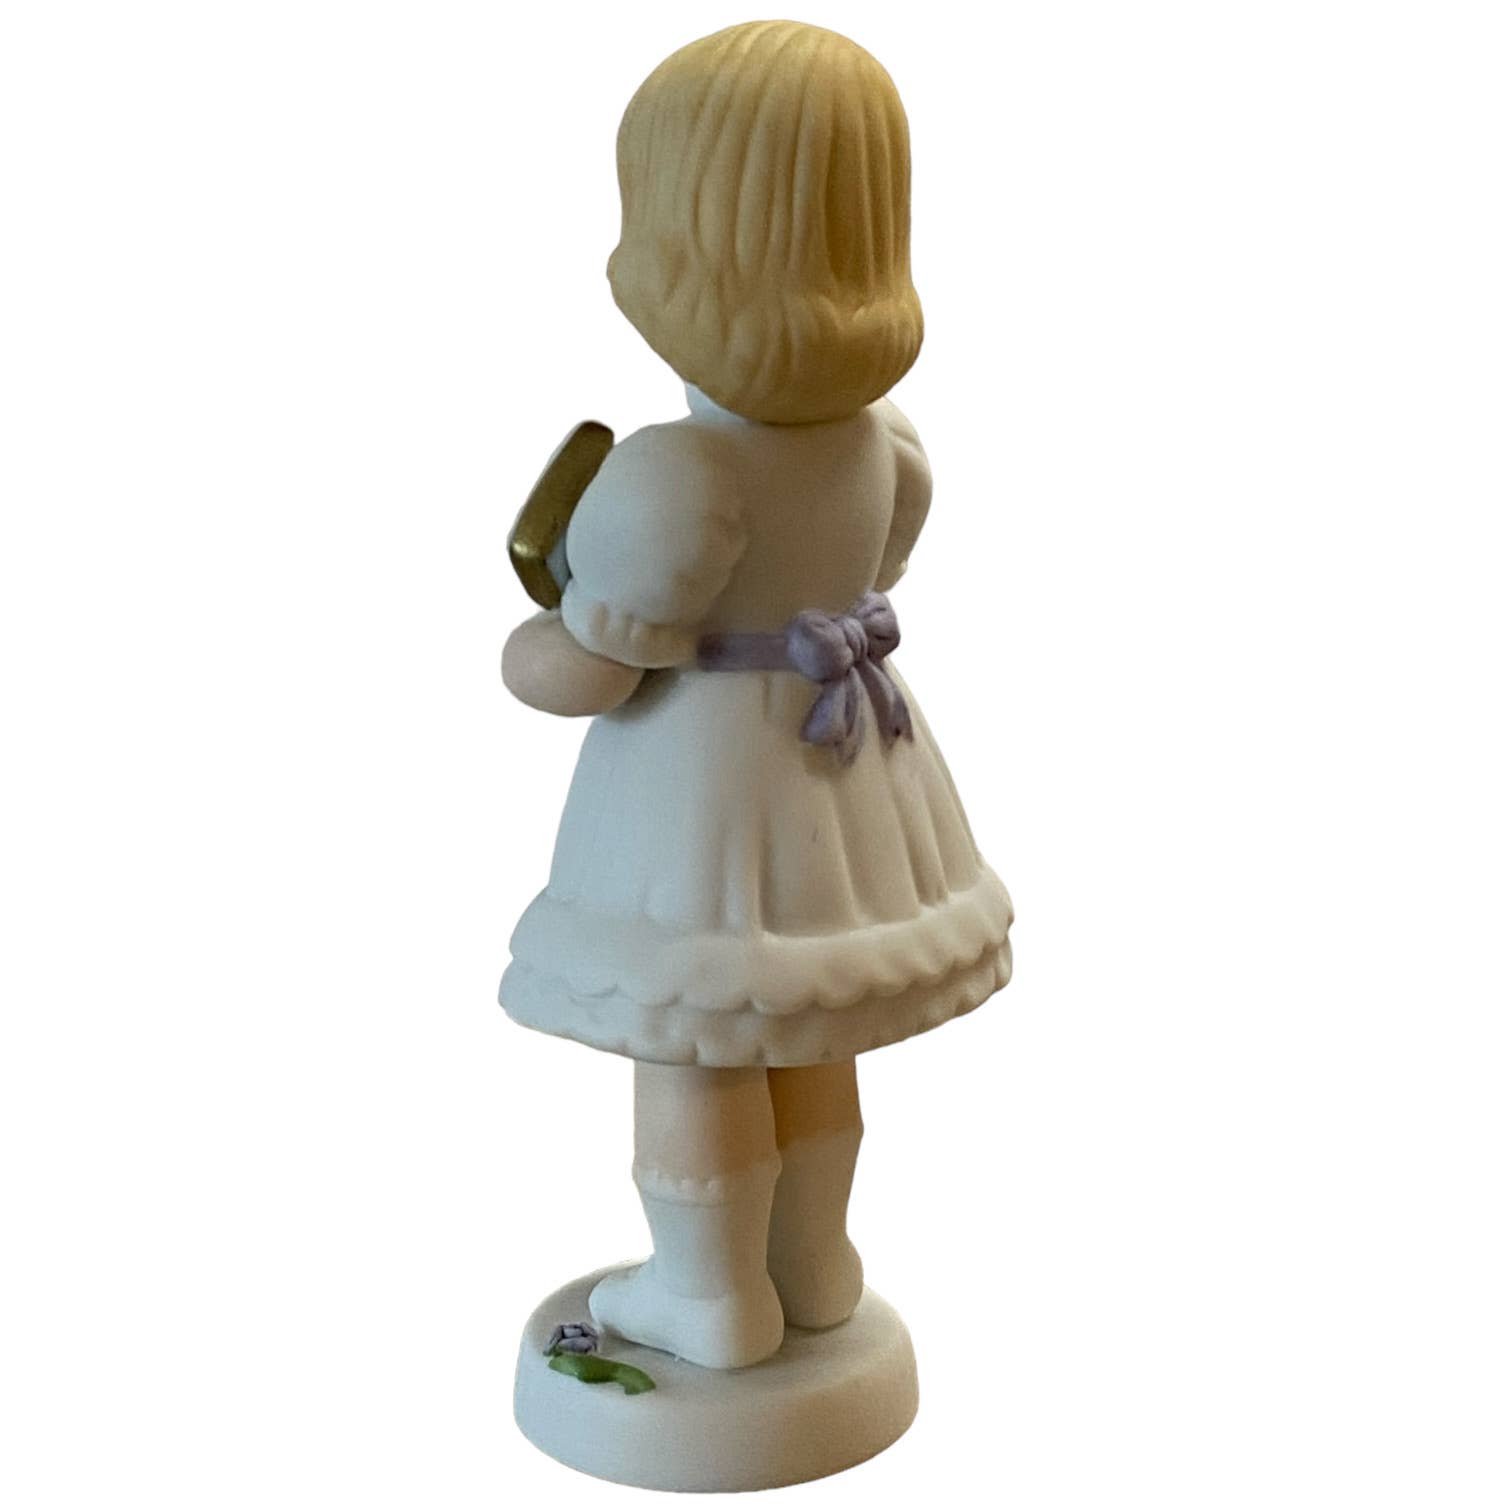 Enesco Growing Up Girls Blonde Communion Confirmation 4.5" Figurine 515809 NIB